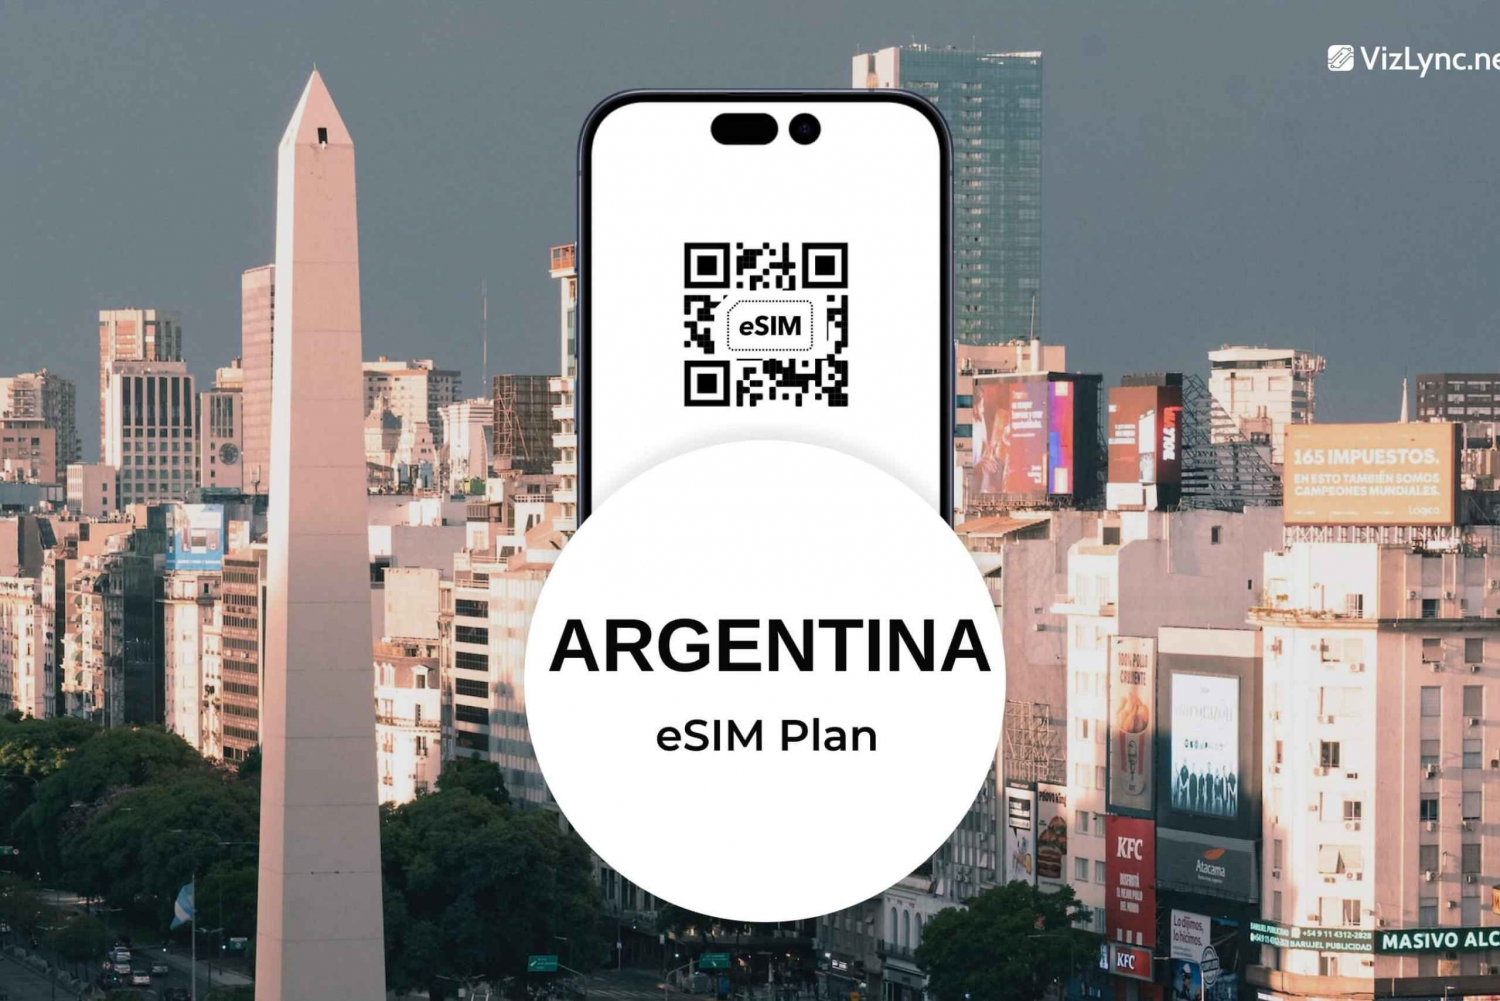 Argentina Travel eSIM plan with Super fast Mobile Data